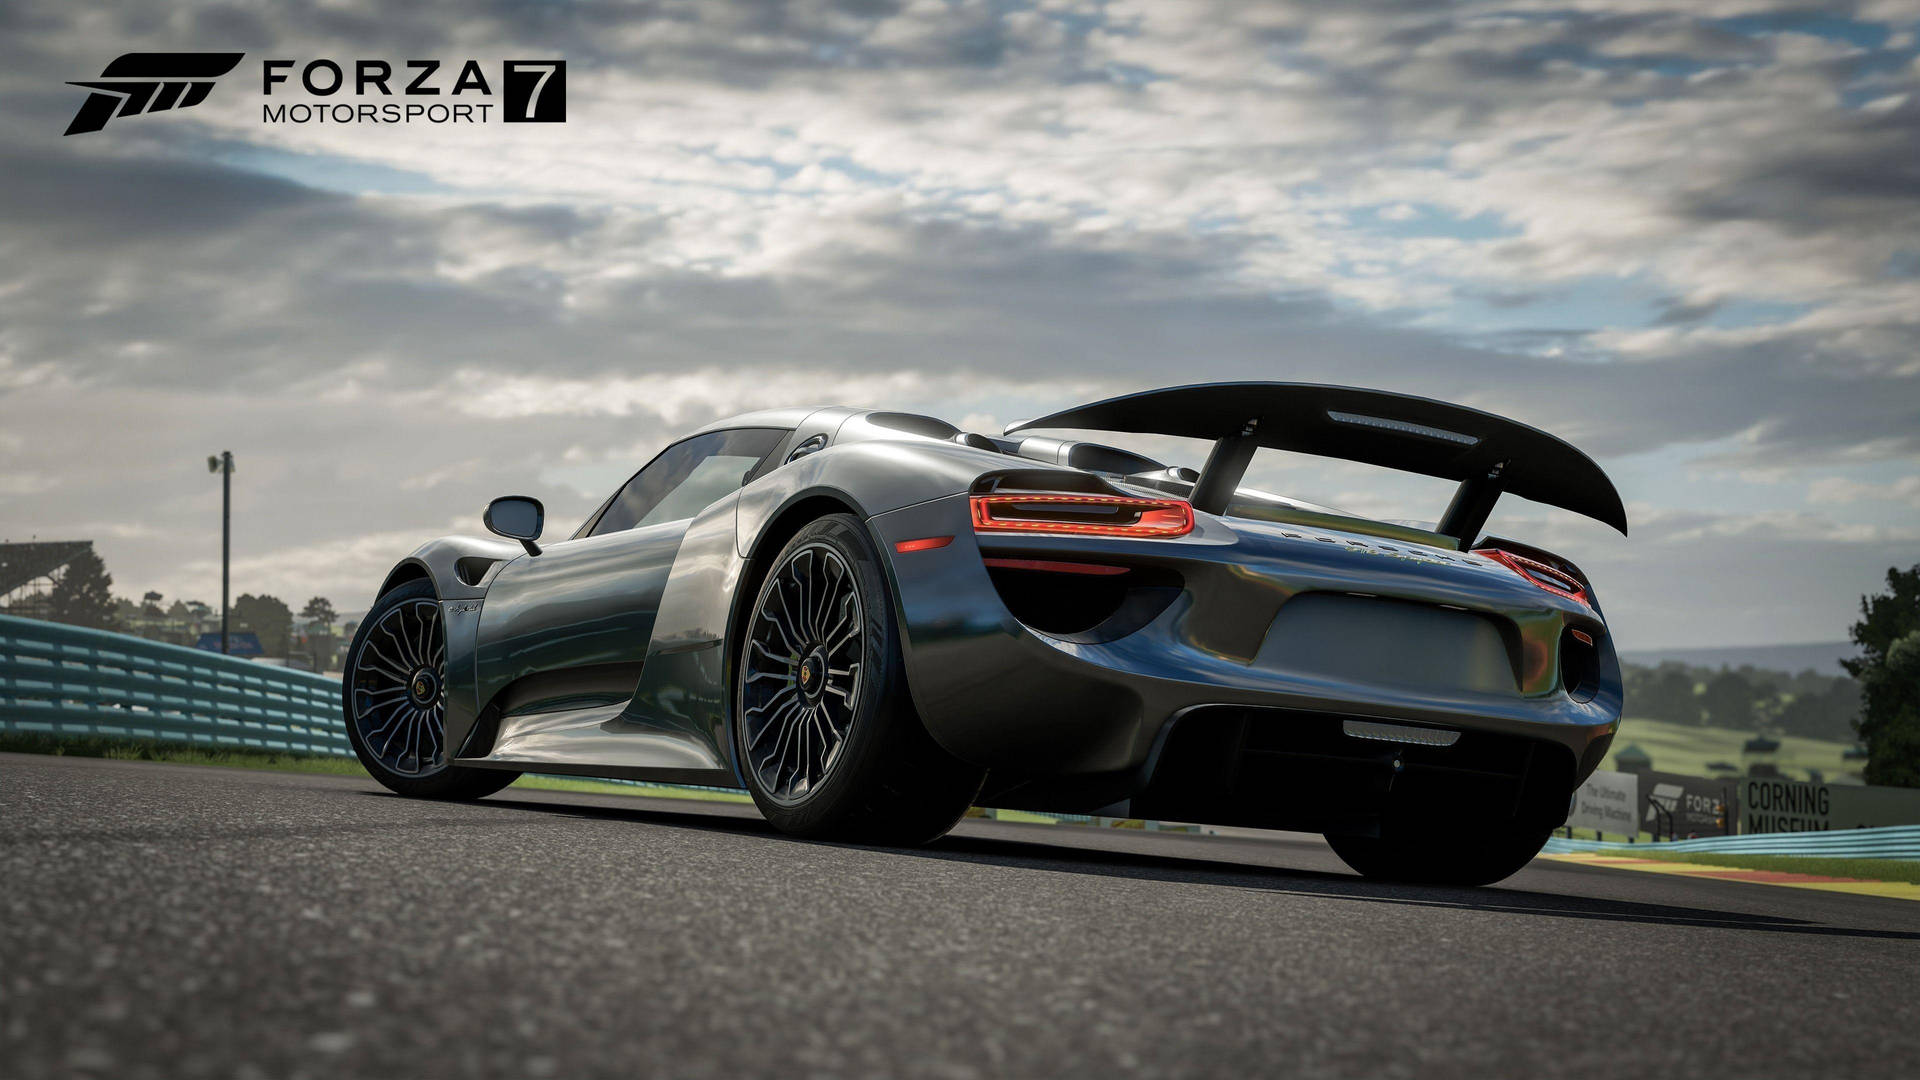 Thrilling Speed - Lotus Elise On Forza 7